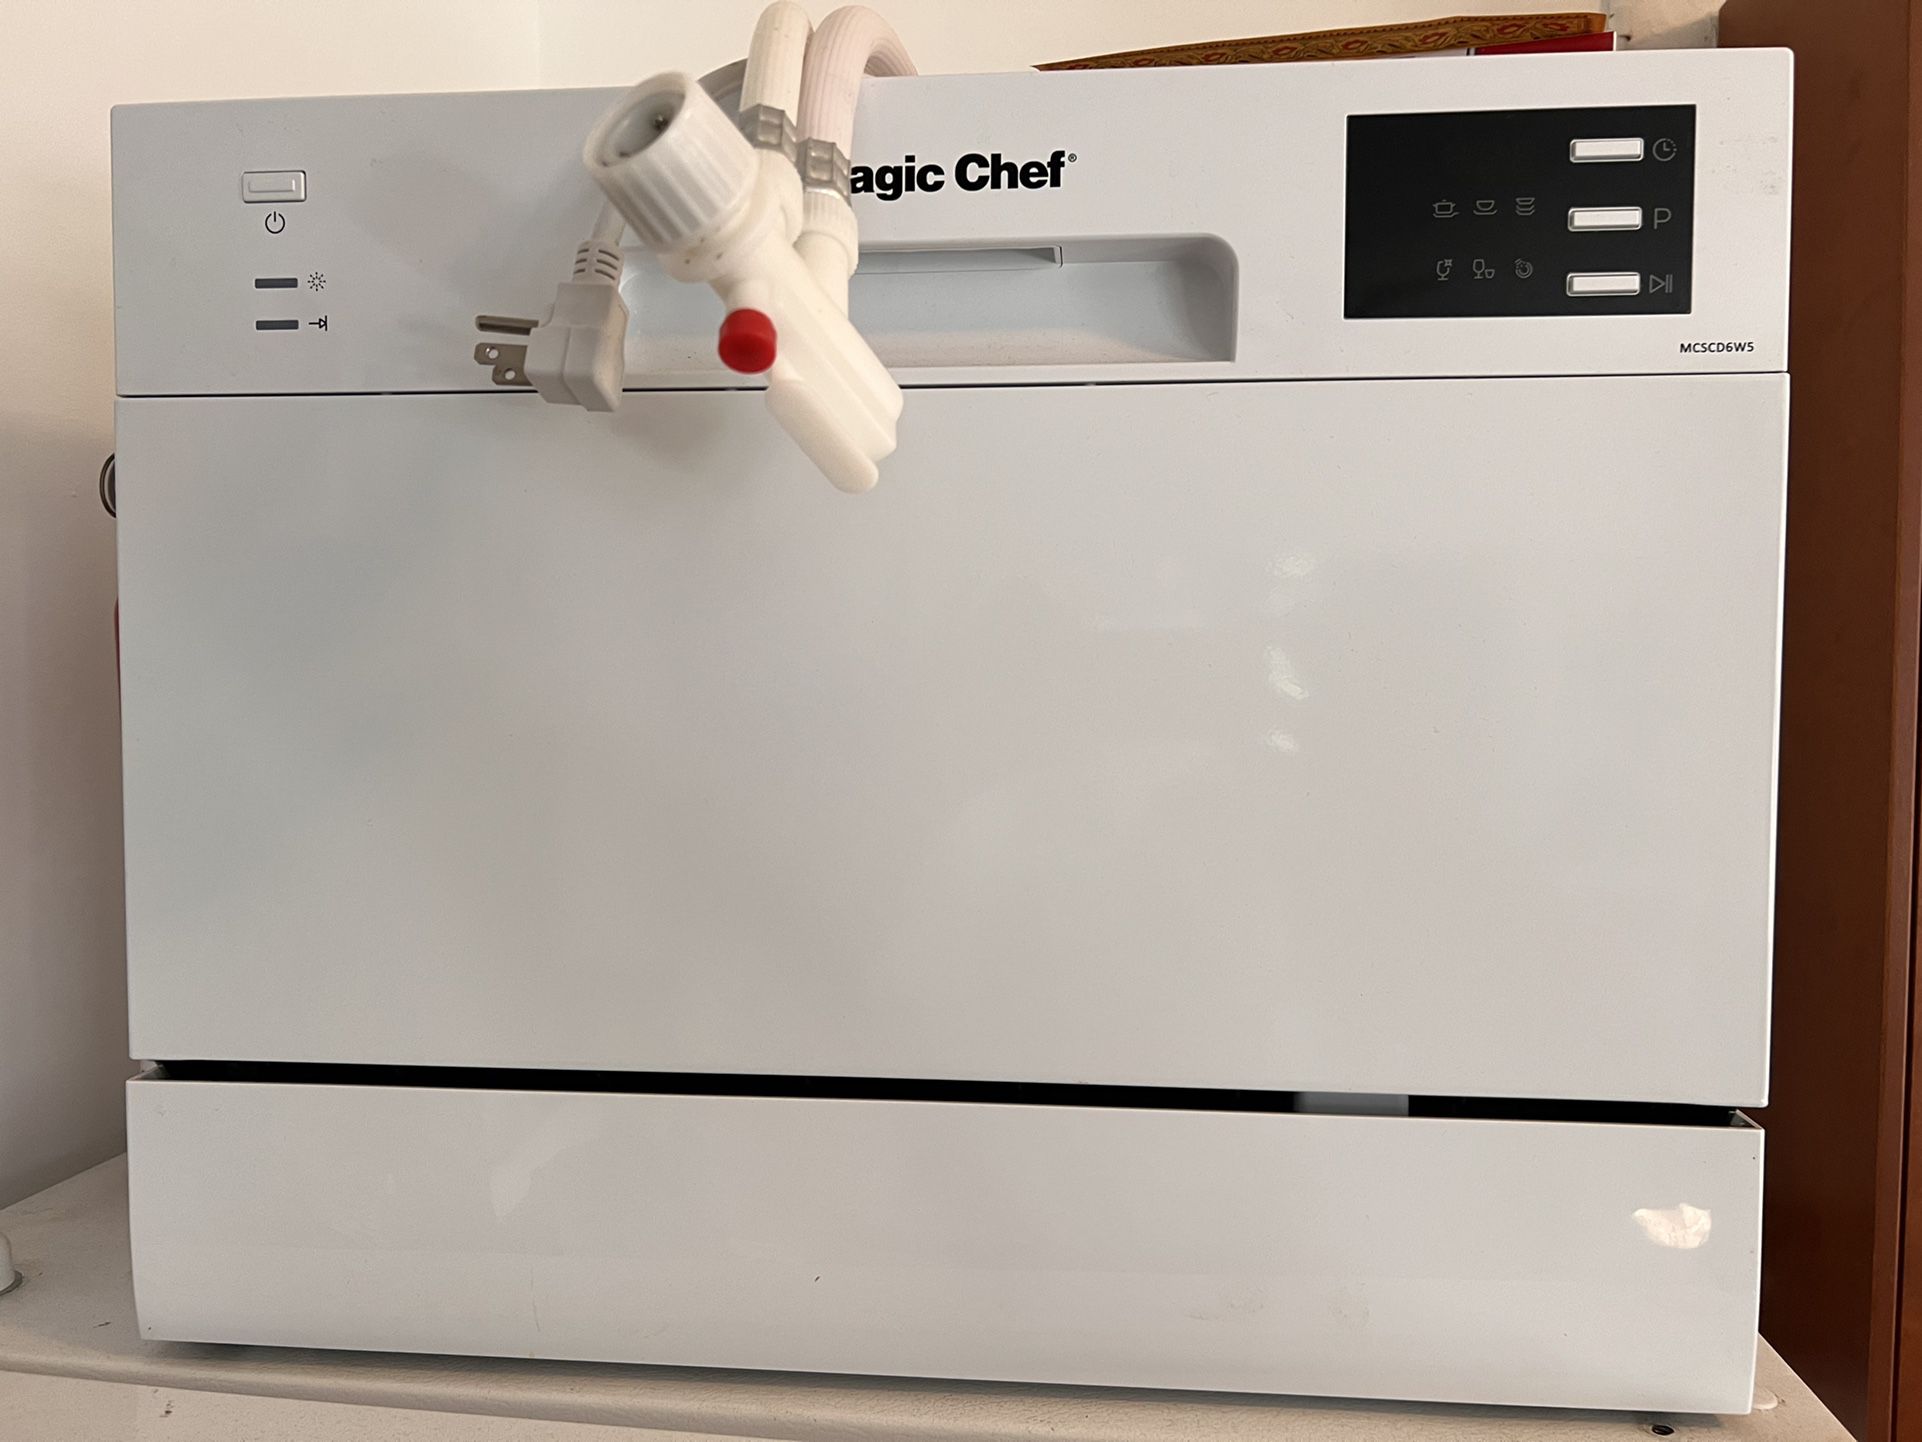 Magic Chef 6-Place Setting Countertop Dishwasher White Mcscd6w5